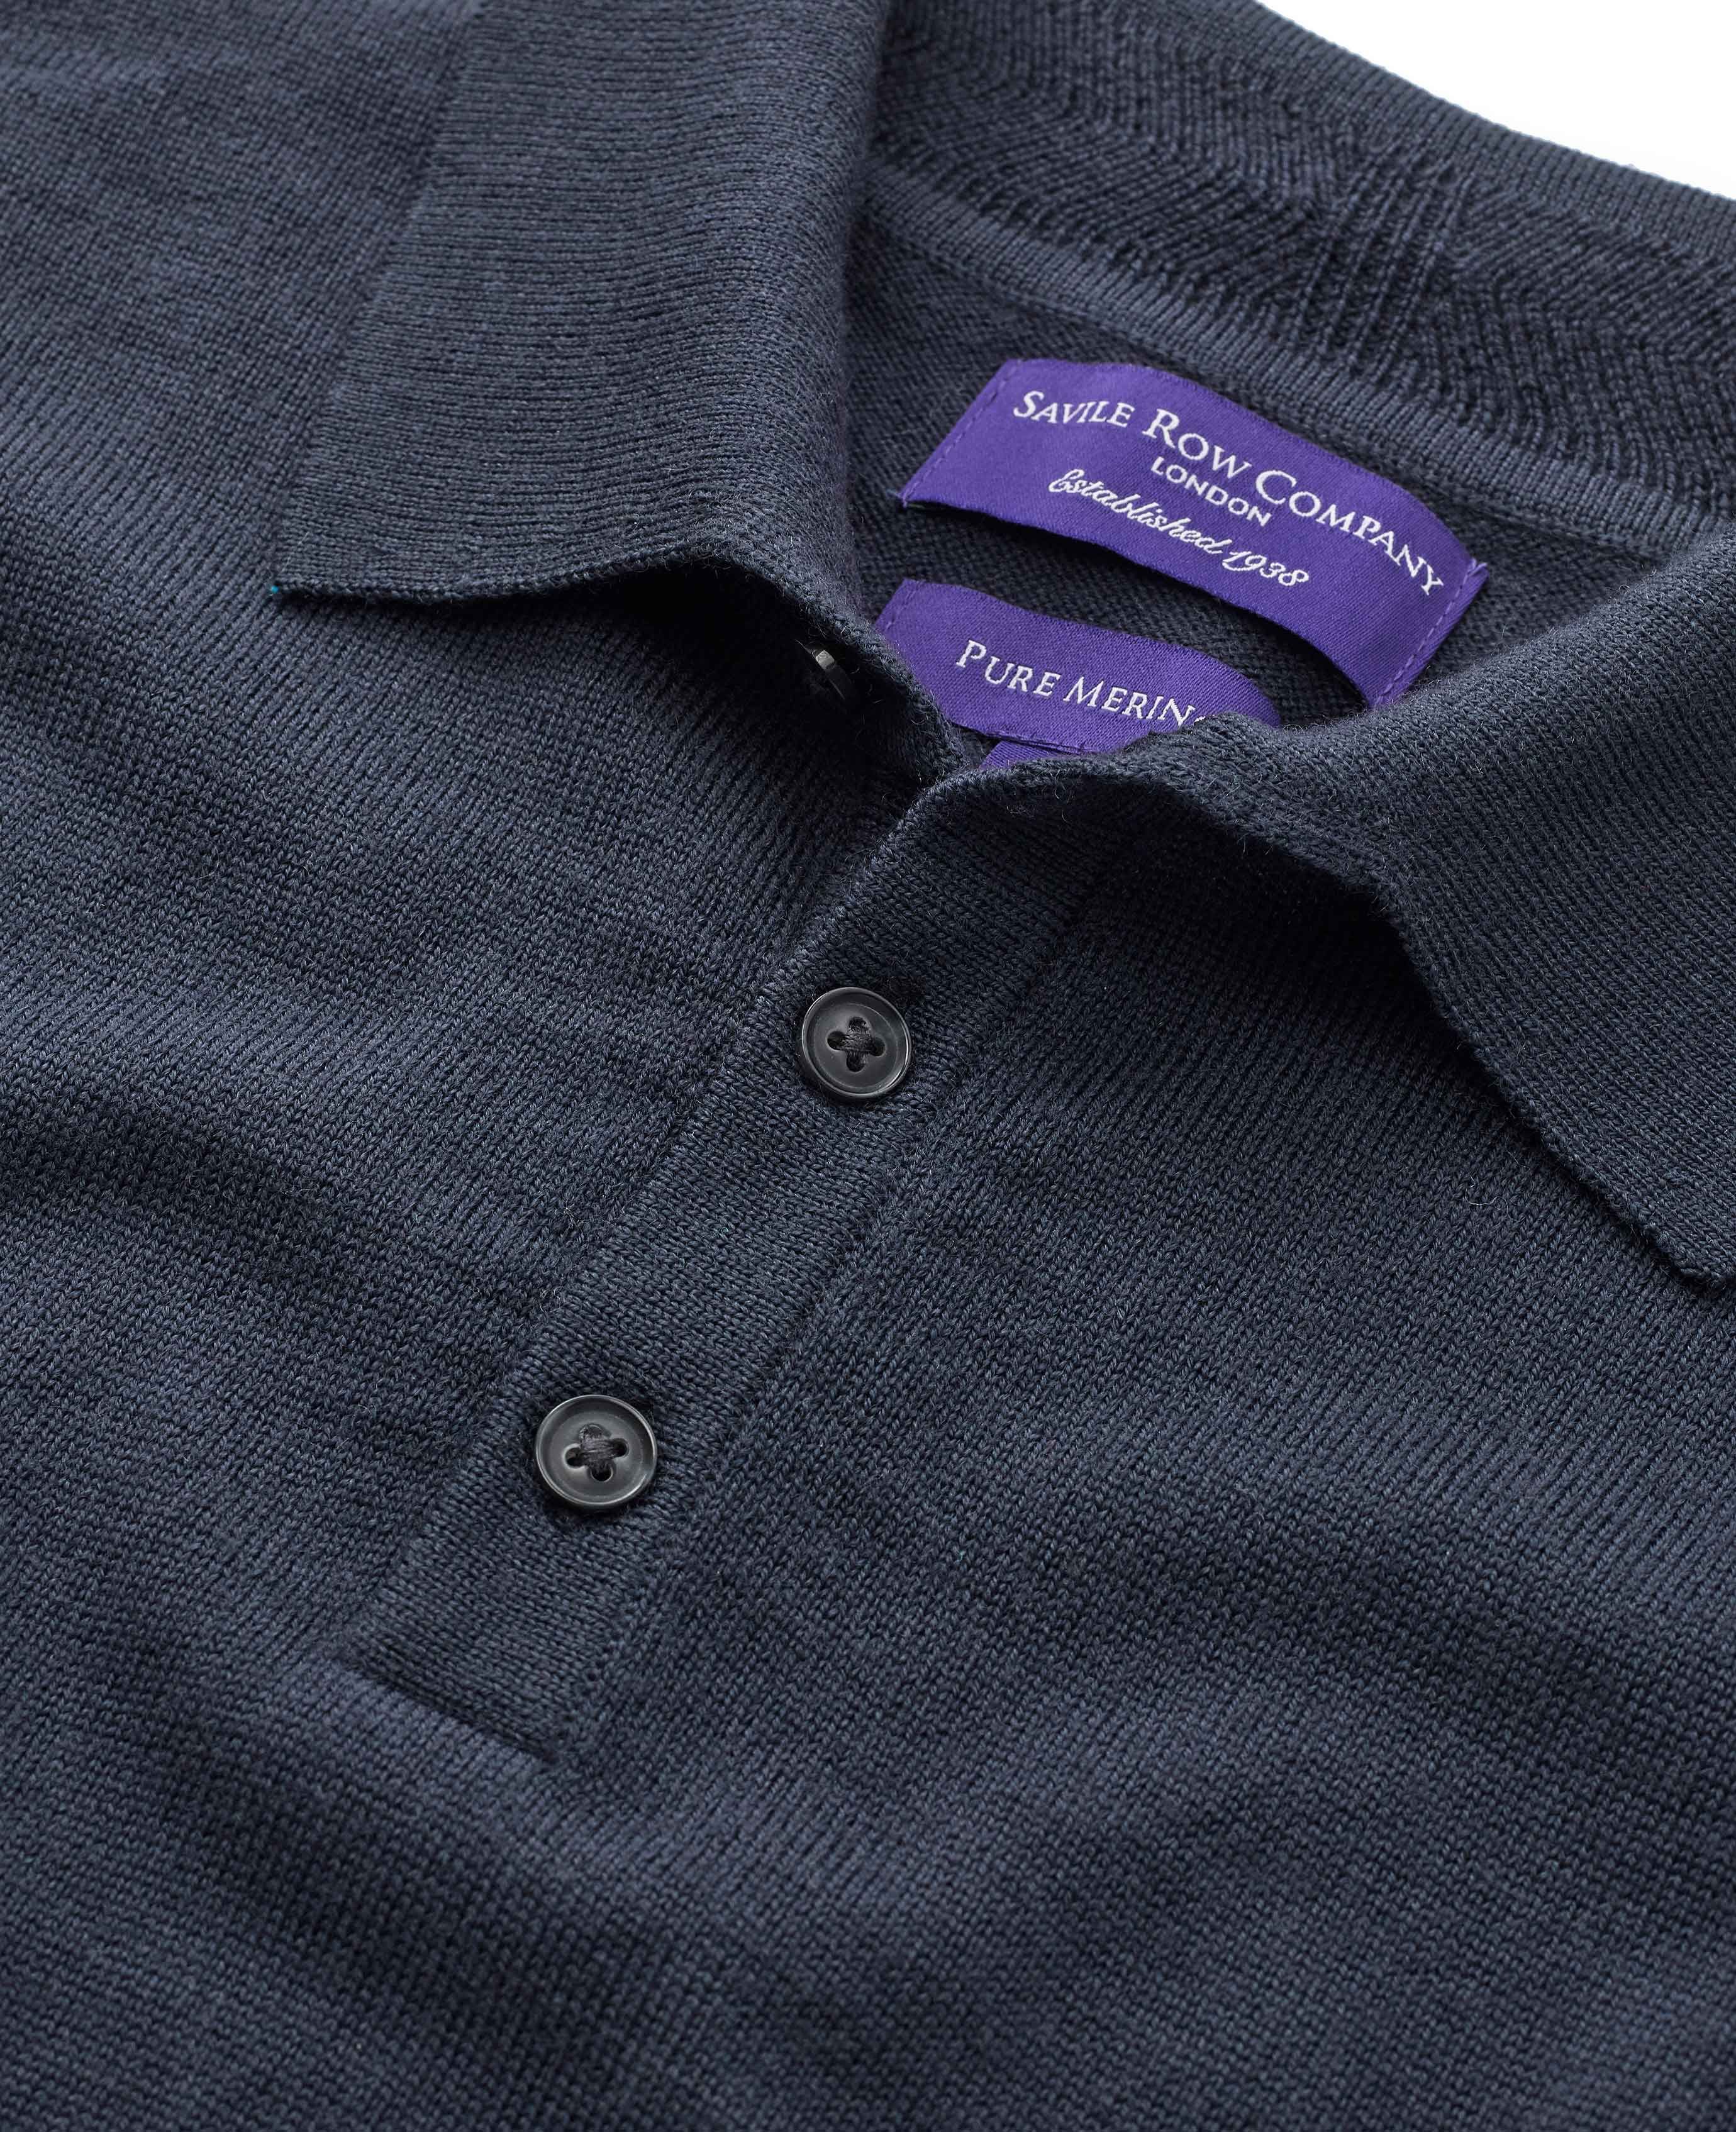 Men’s Merino Wool Knitted Polo Shirt in Navy | Savile Row Co